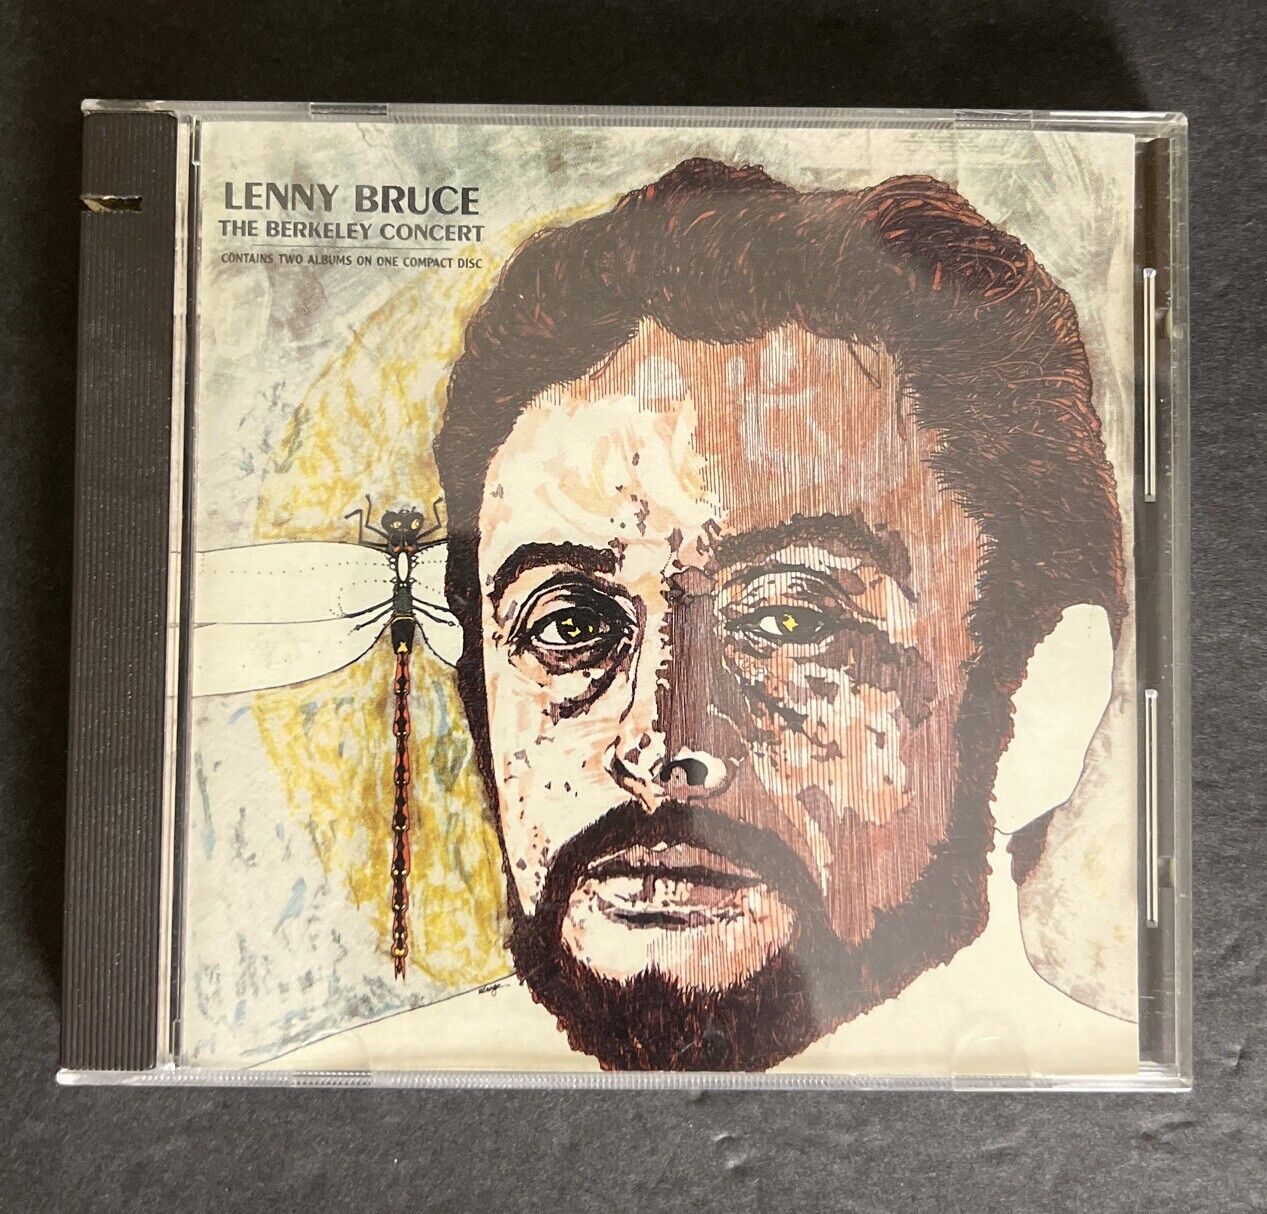 Lenny Bruce - The Berkeley Concert CD (Rhino, 1989) Bizzare/Straight Records